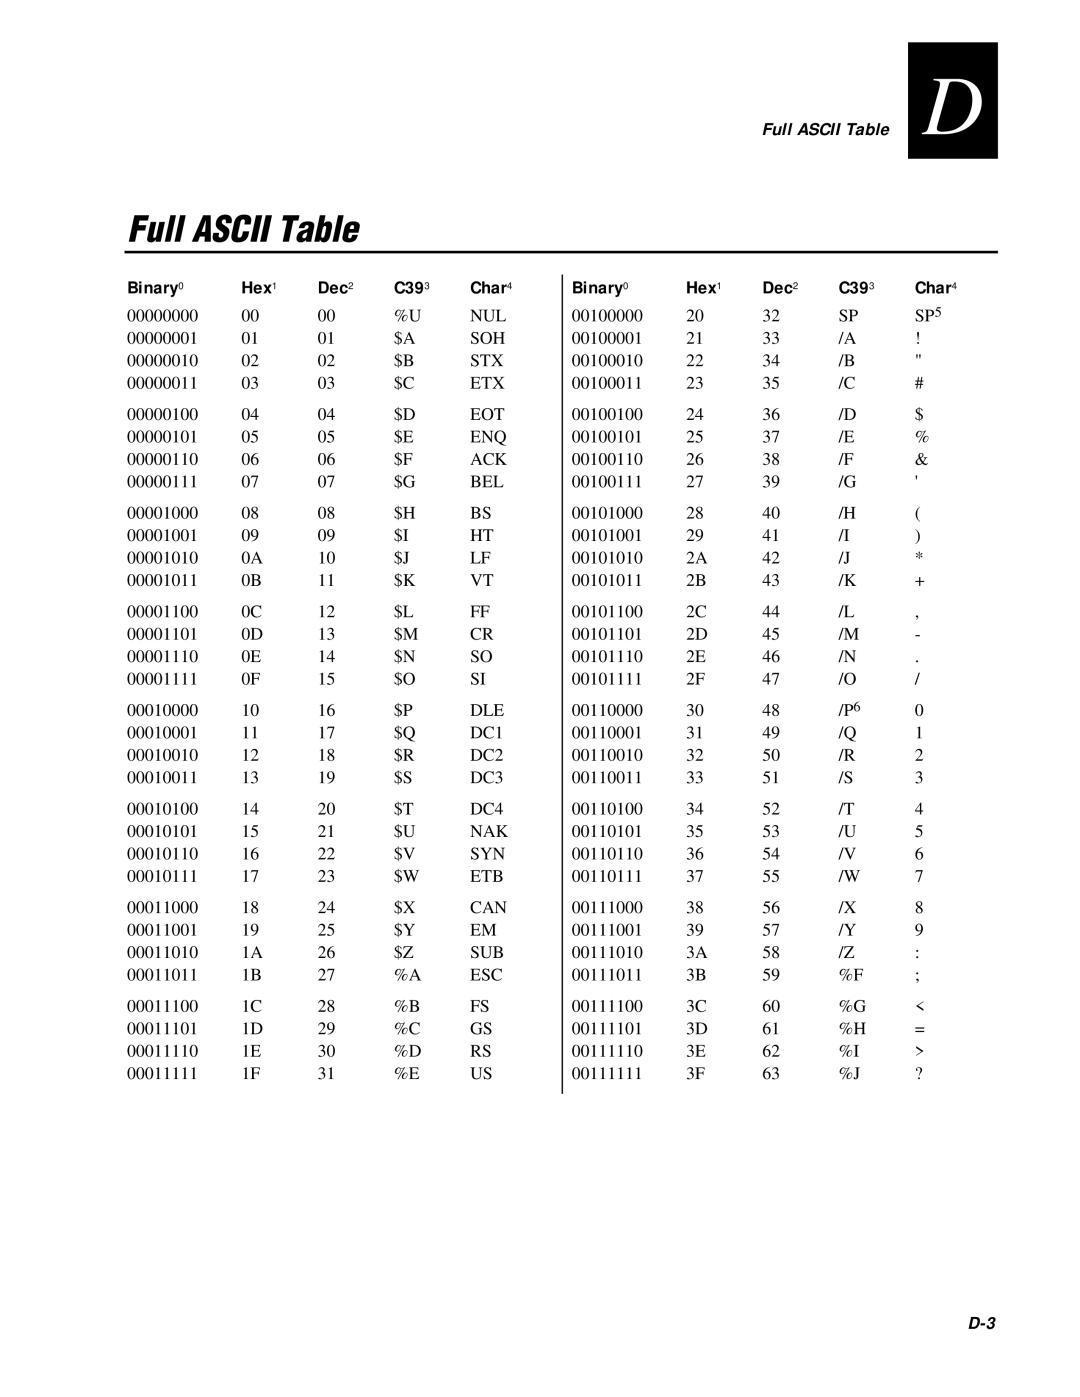 IBM EasyCoder 3400e user manual Full ASCII Table, Binary0, Hex1, Dec2, C393 